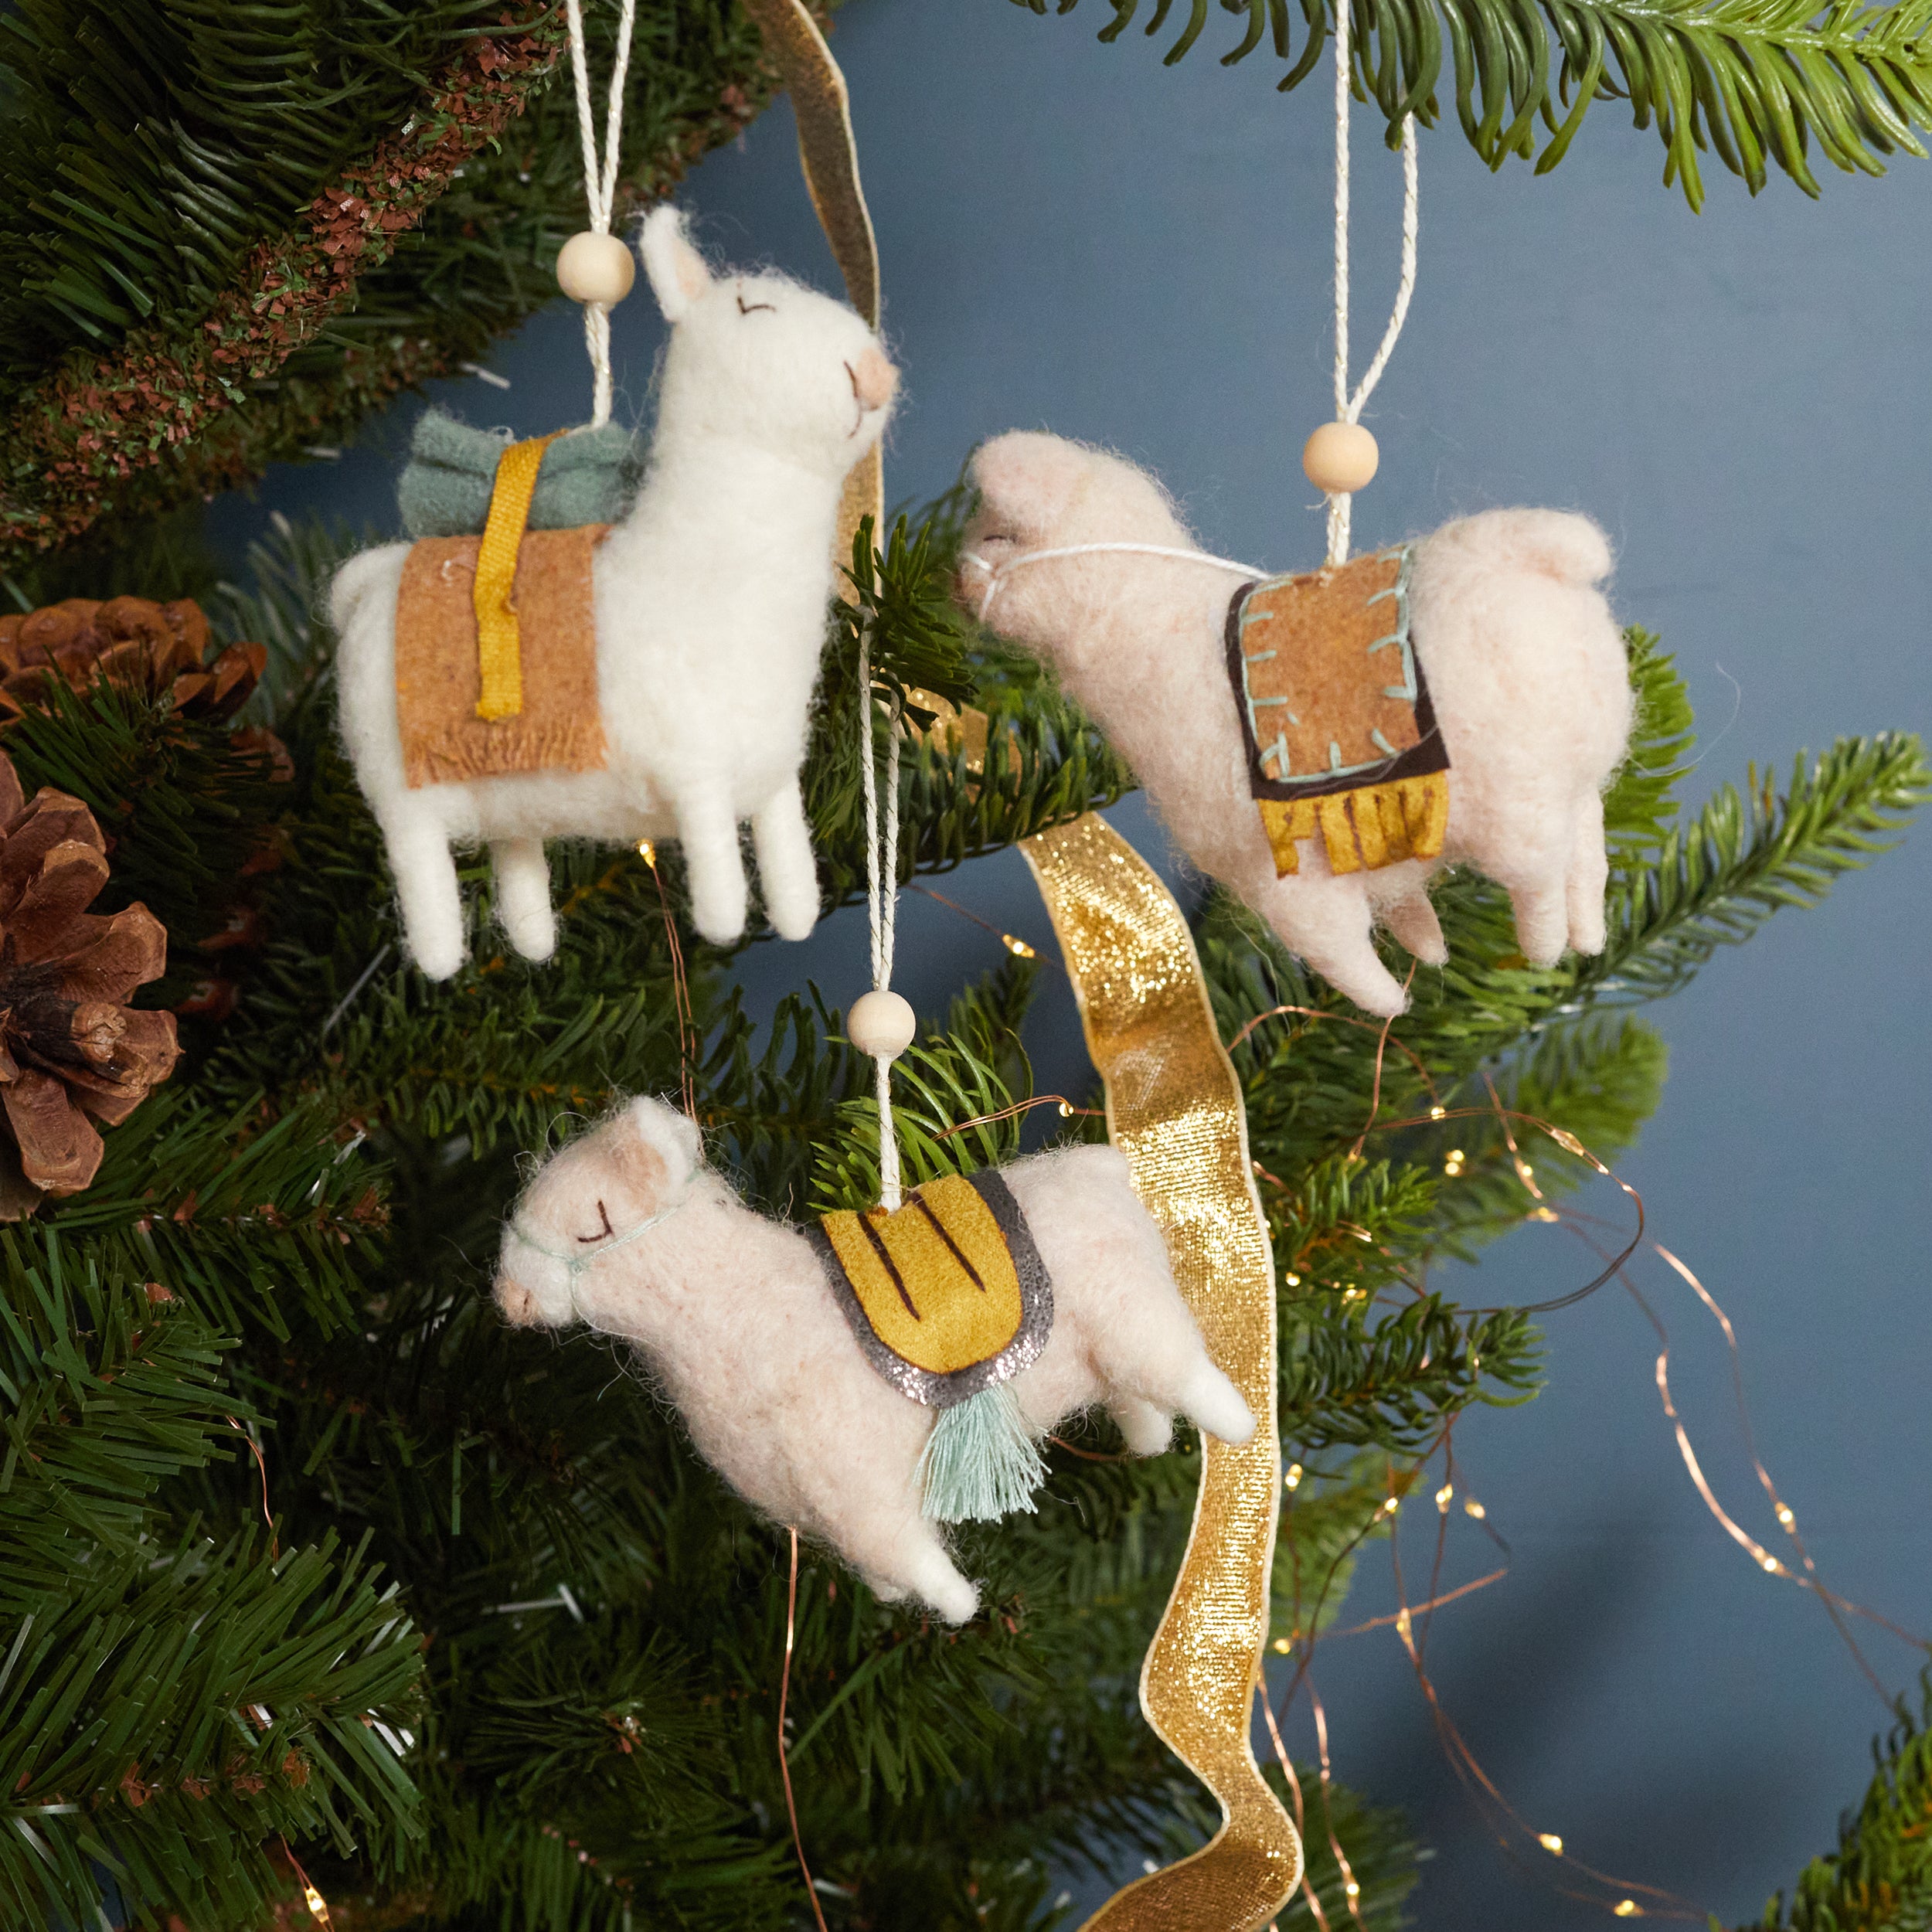 Set of 3, Christmas Ornaments, Felt Christmas Decorations